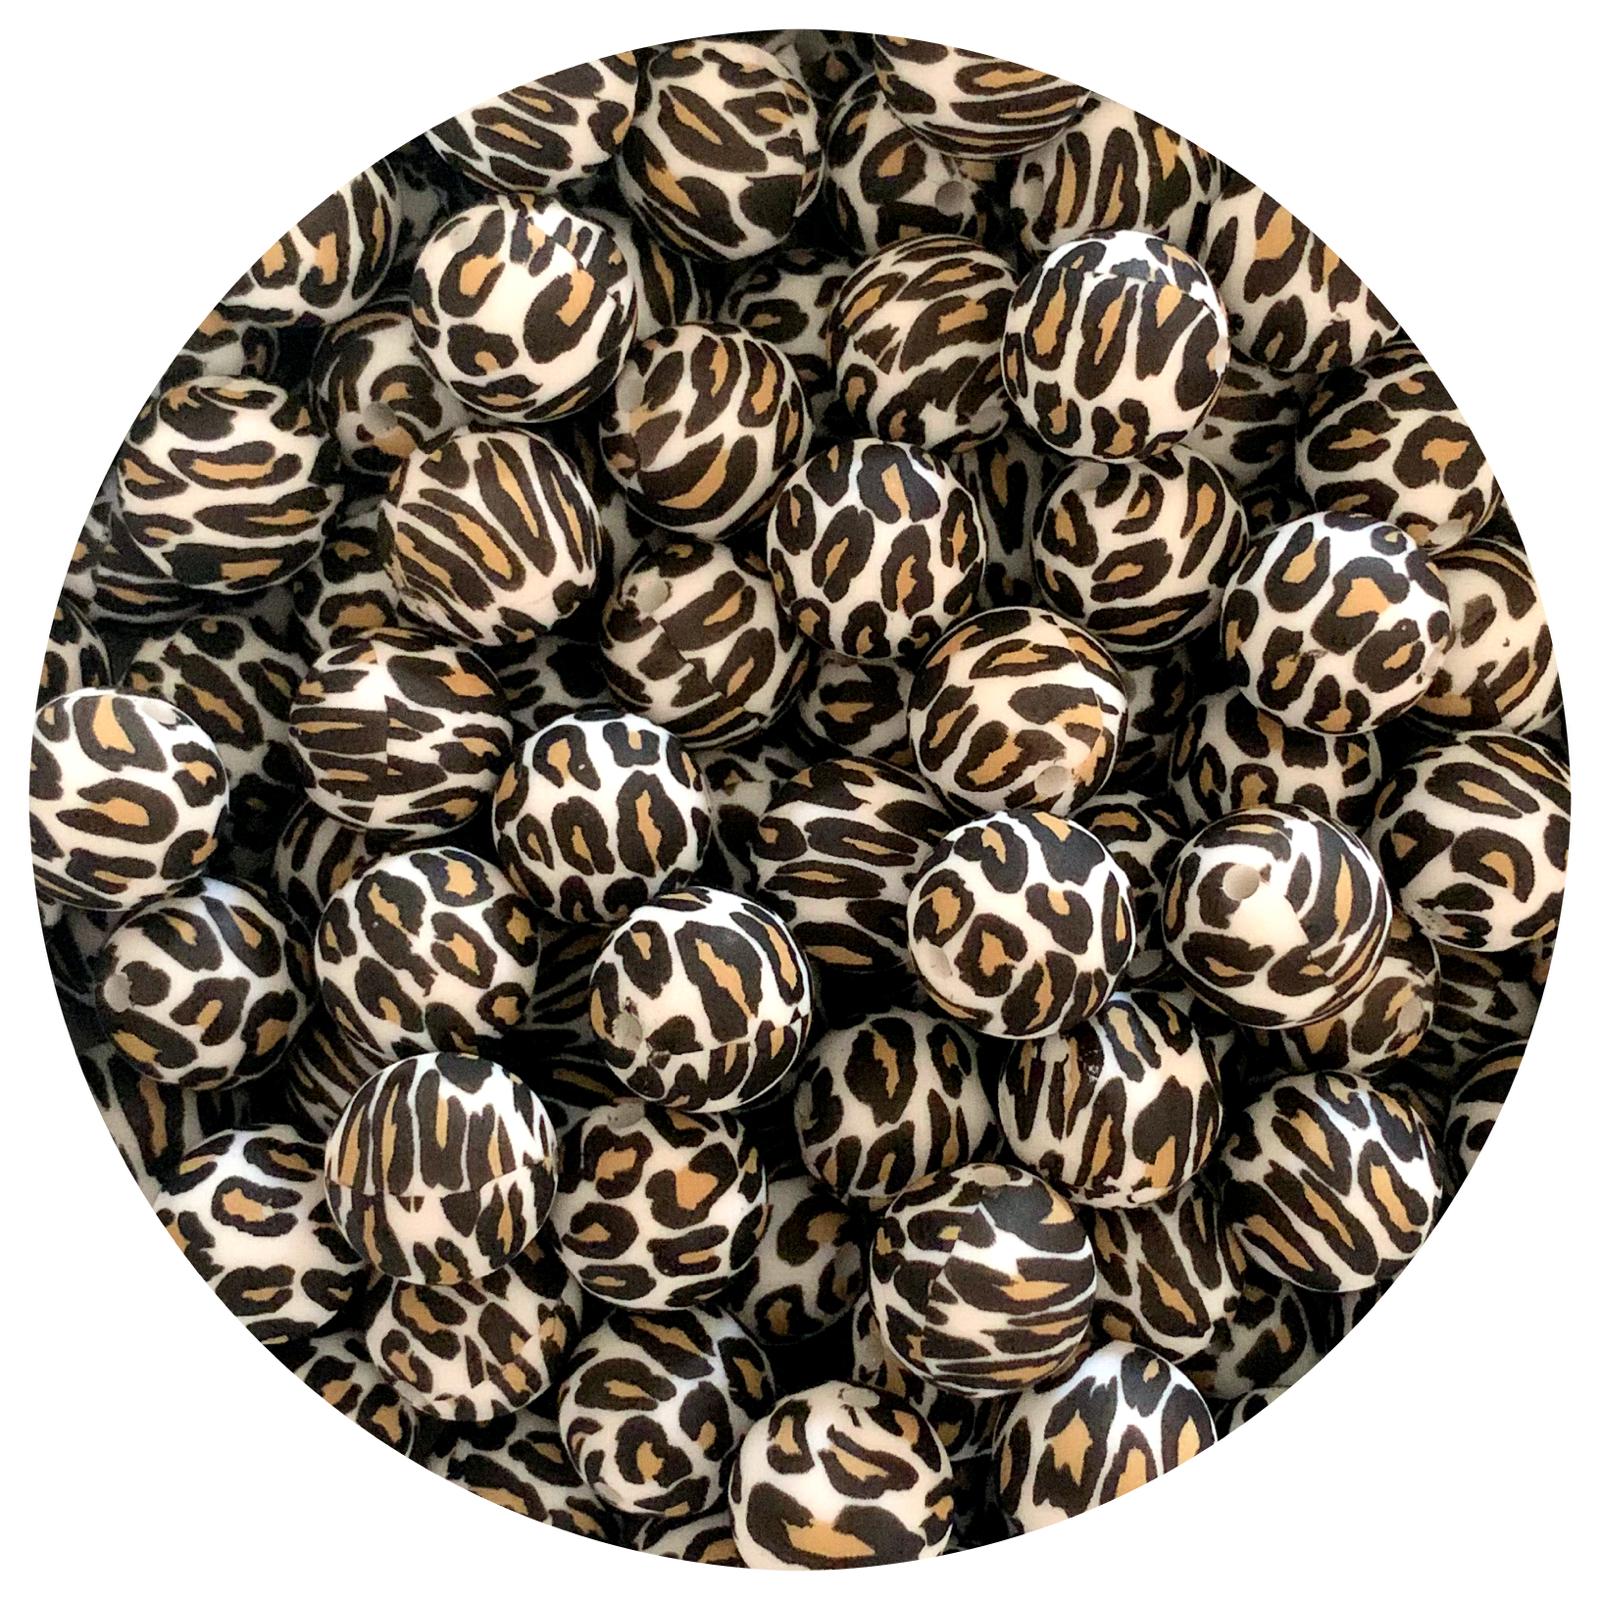 Snow Leopard - 15mm round - 10 Beads